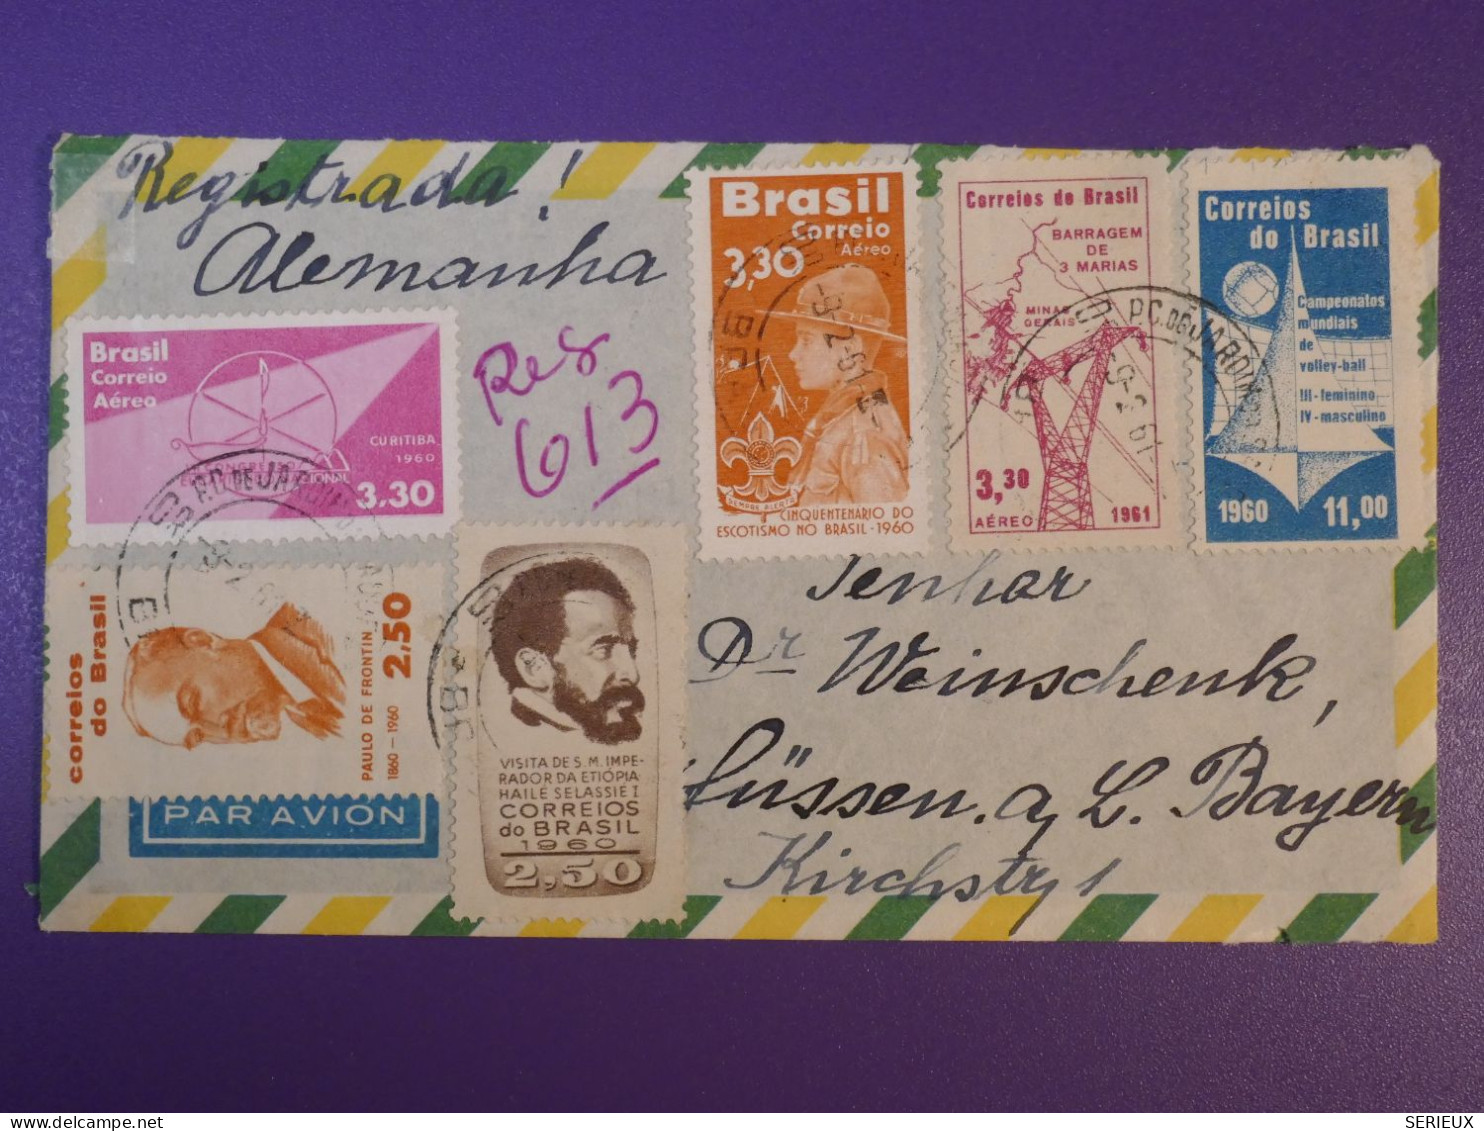 DG4  BRAZIL BELLE LETTRE  1961  SAO PAULO AU BAYERN  ALEMANIA  + ++AFF. PLAISANT+++++ - Covers & Documents